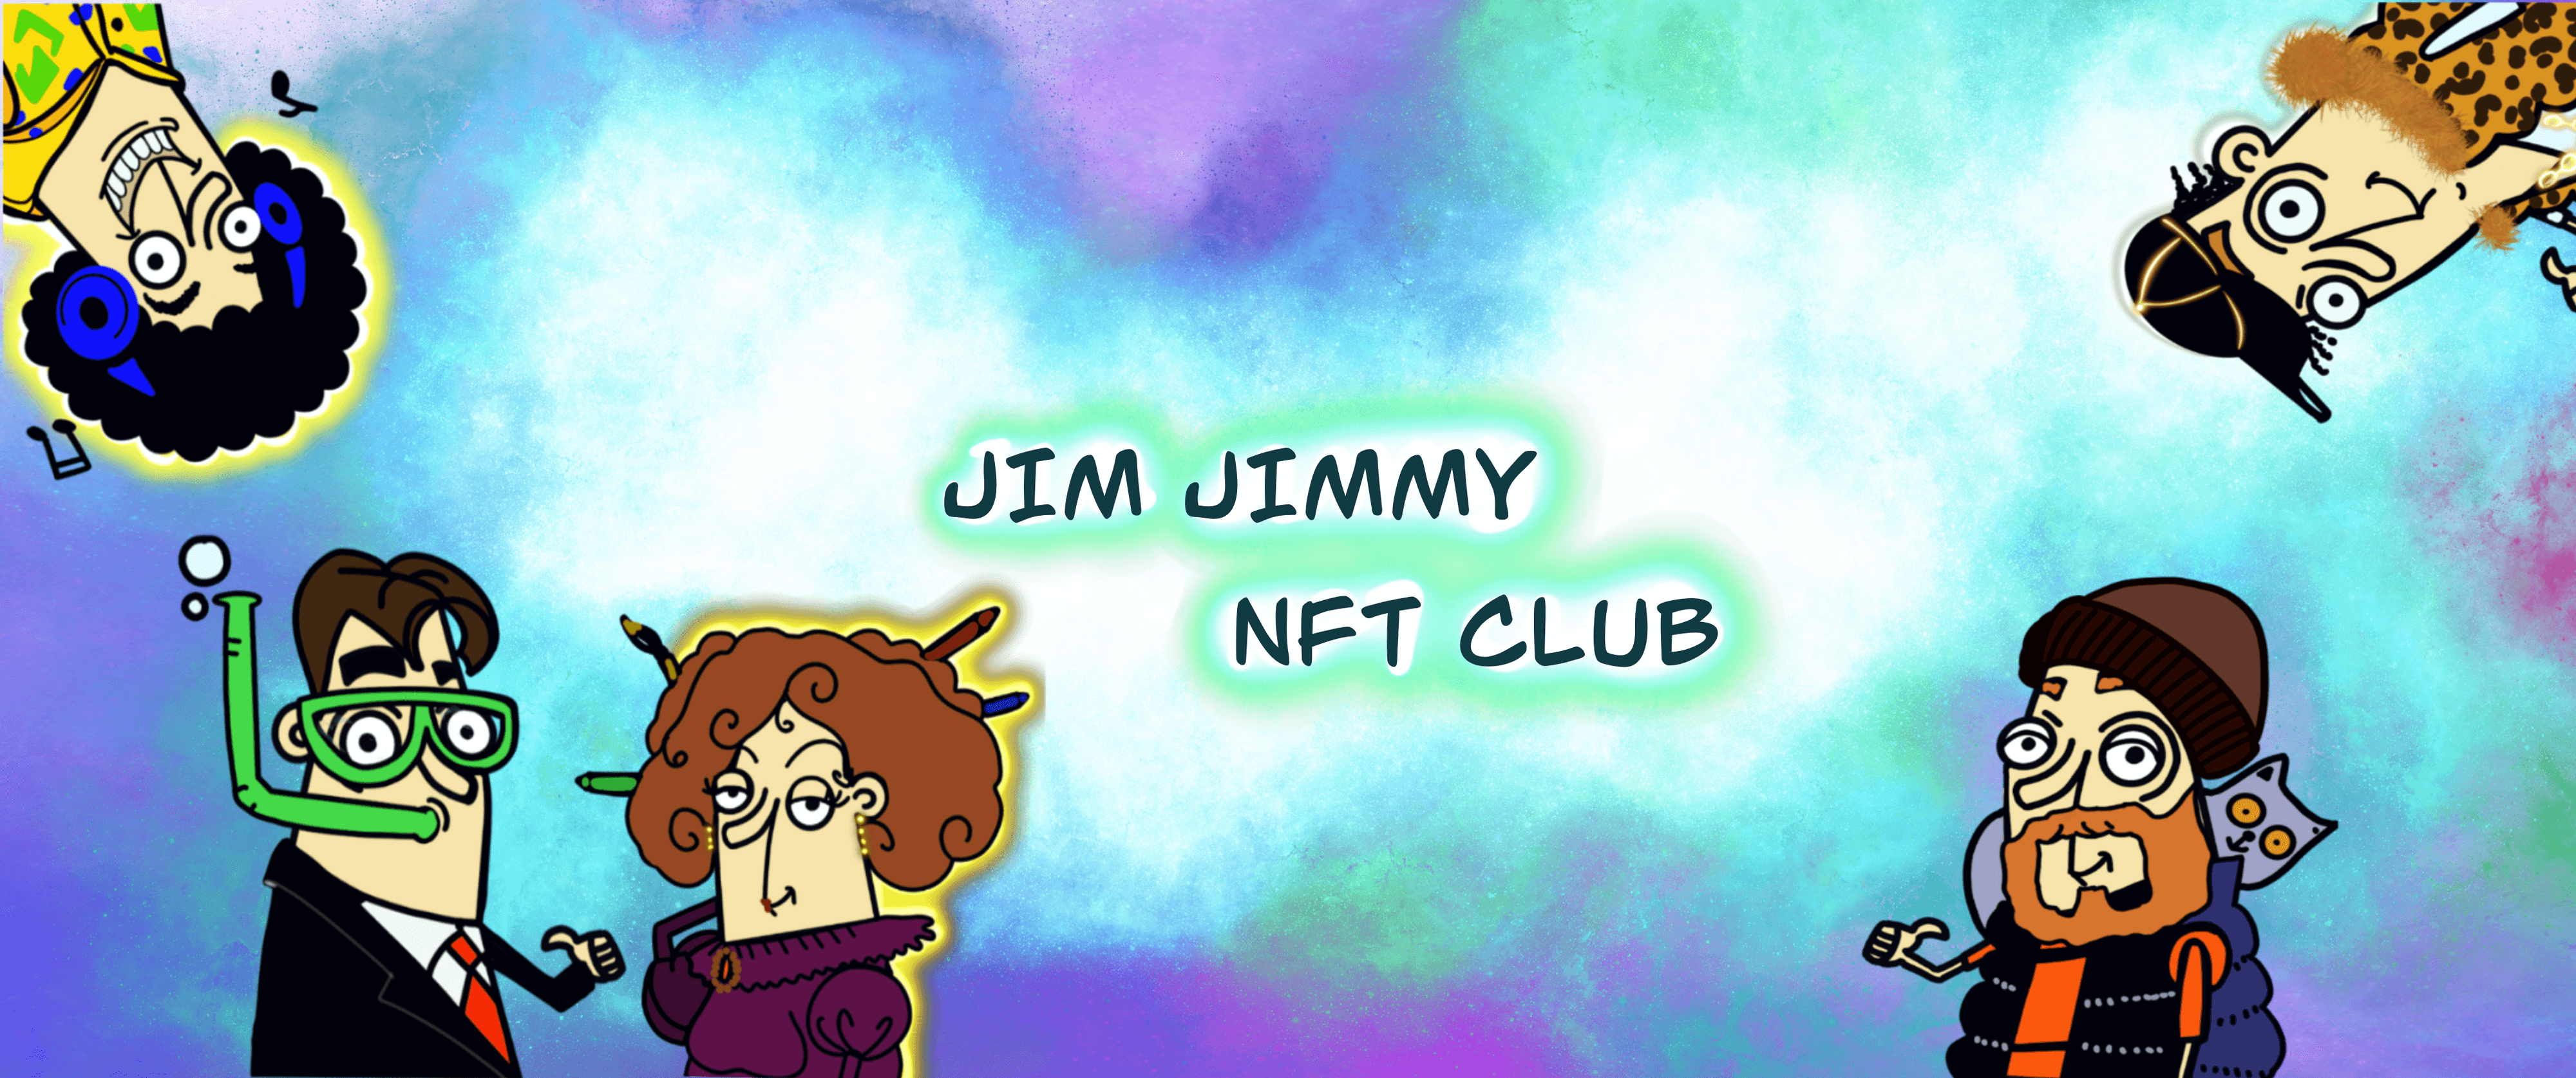 JimJimmy_NFTCLUB banner